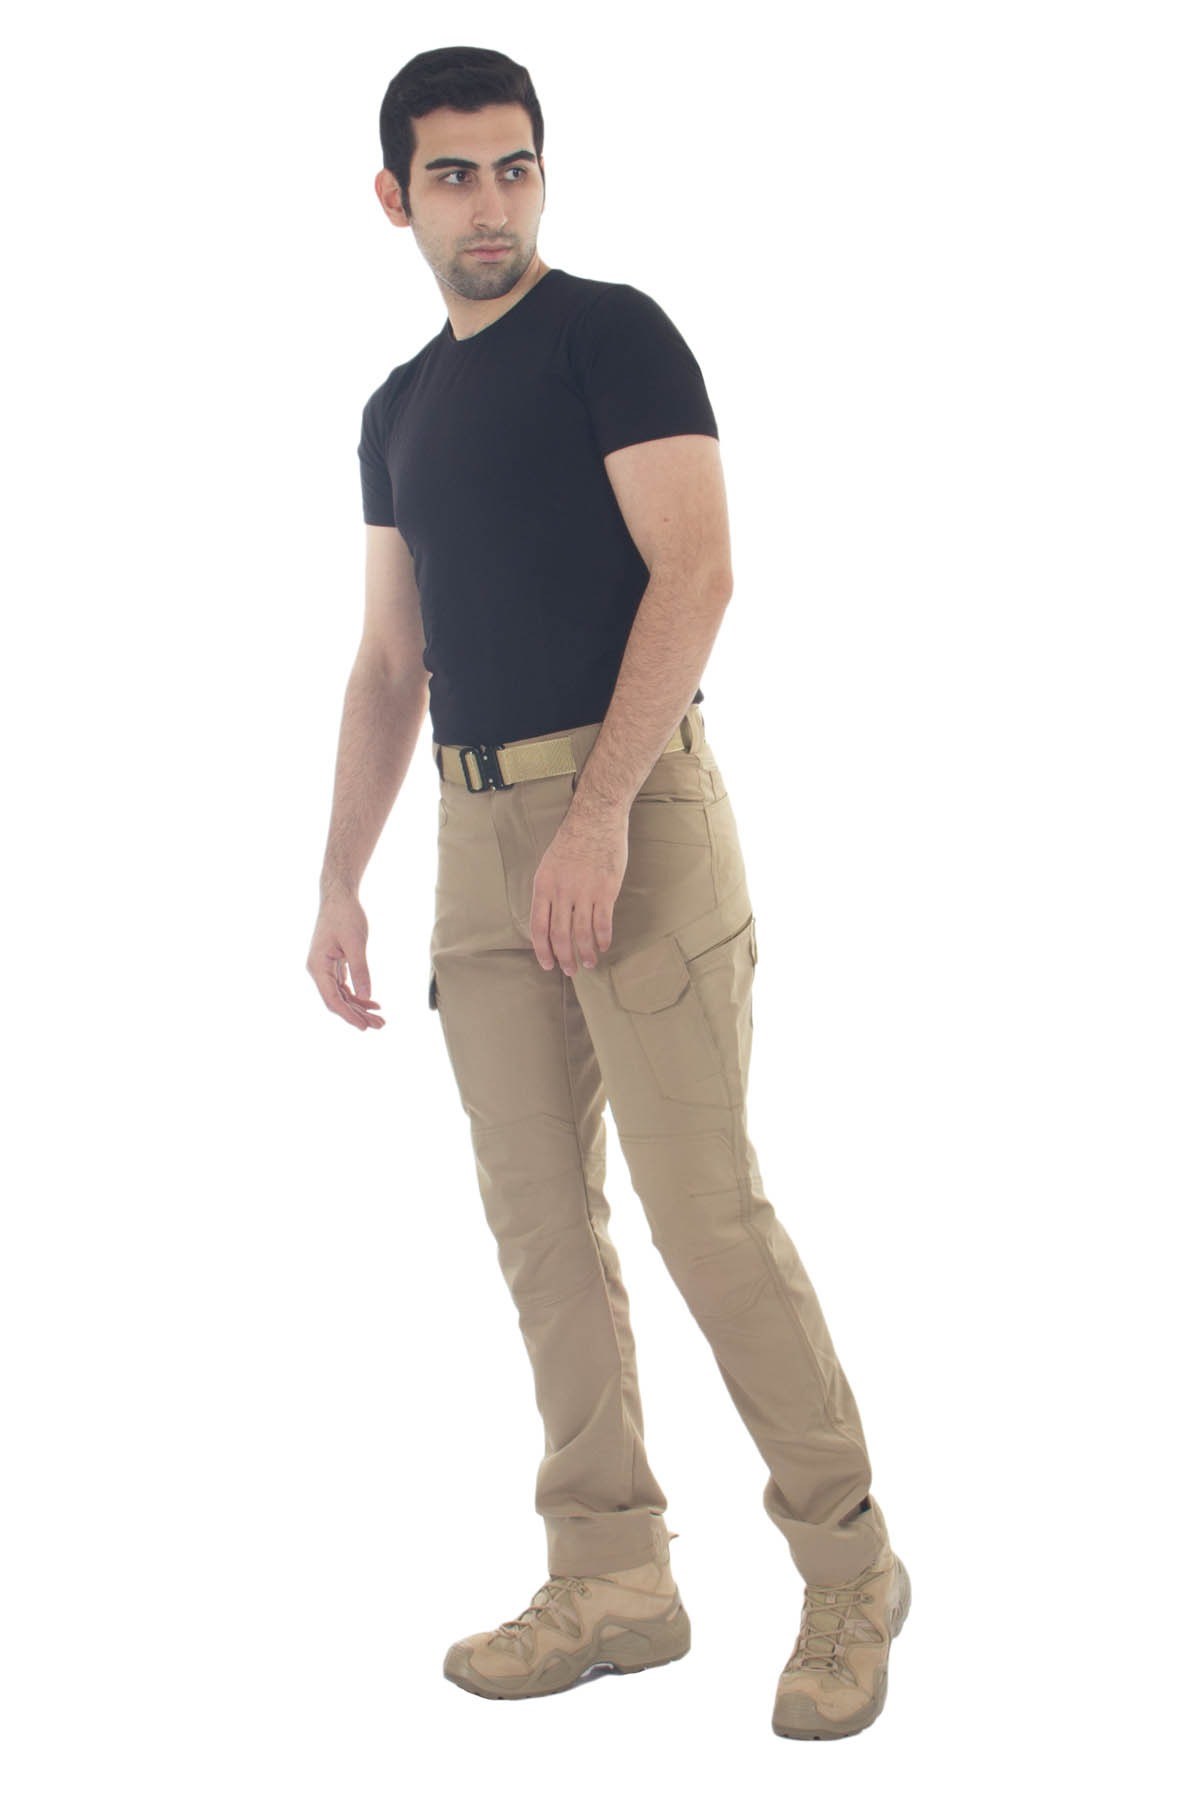 Çöl Rengi Trekking Taktikal Outdoor Pantolon-5.11 Modeli - Polis Sepeti